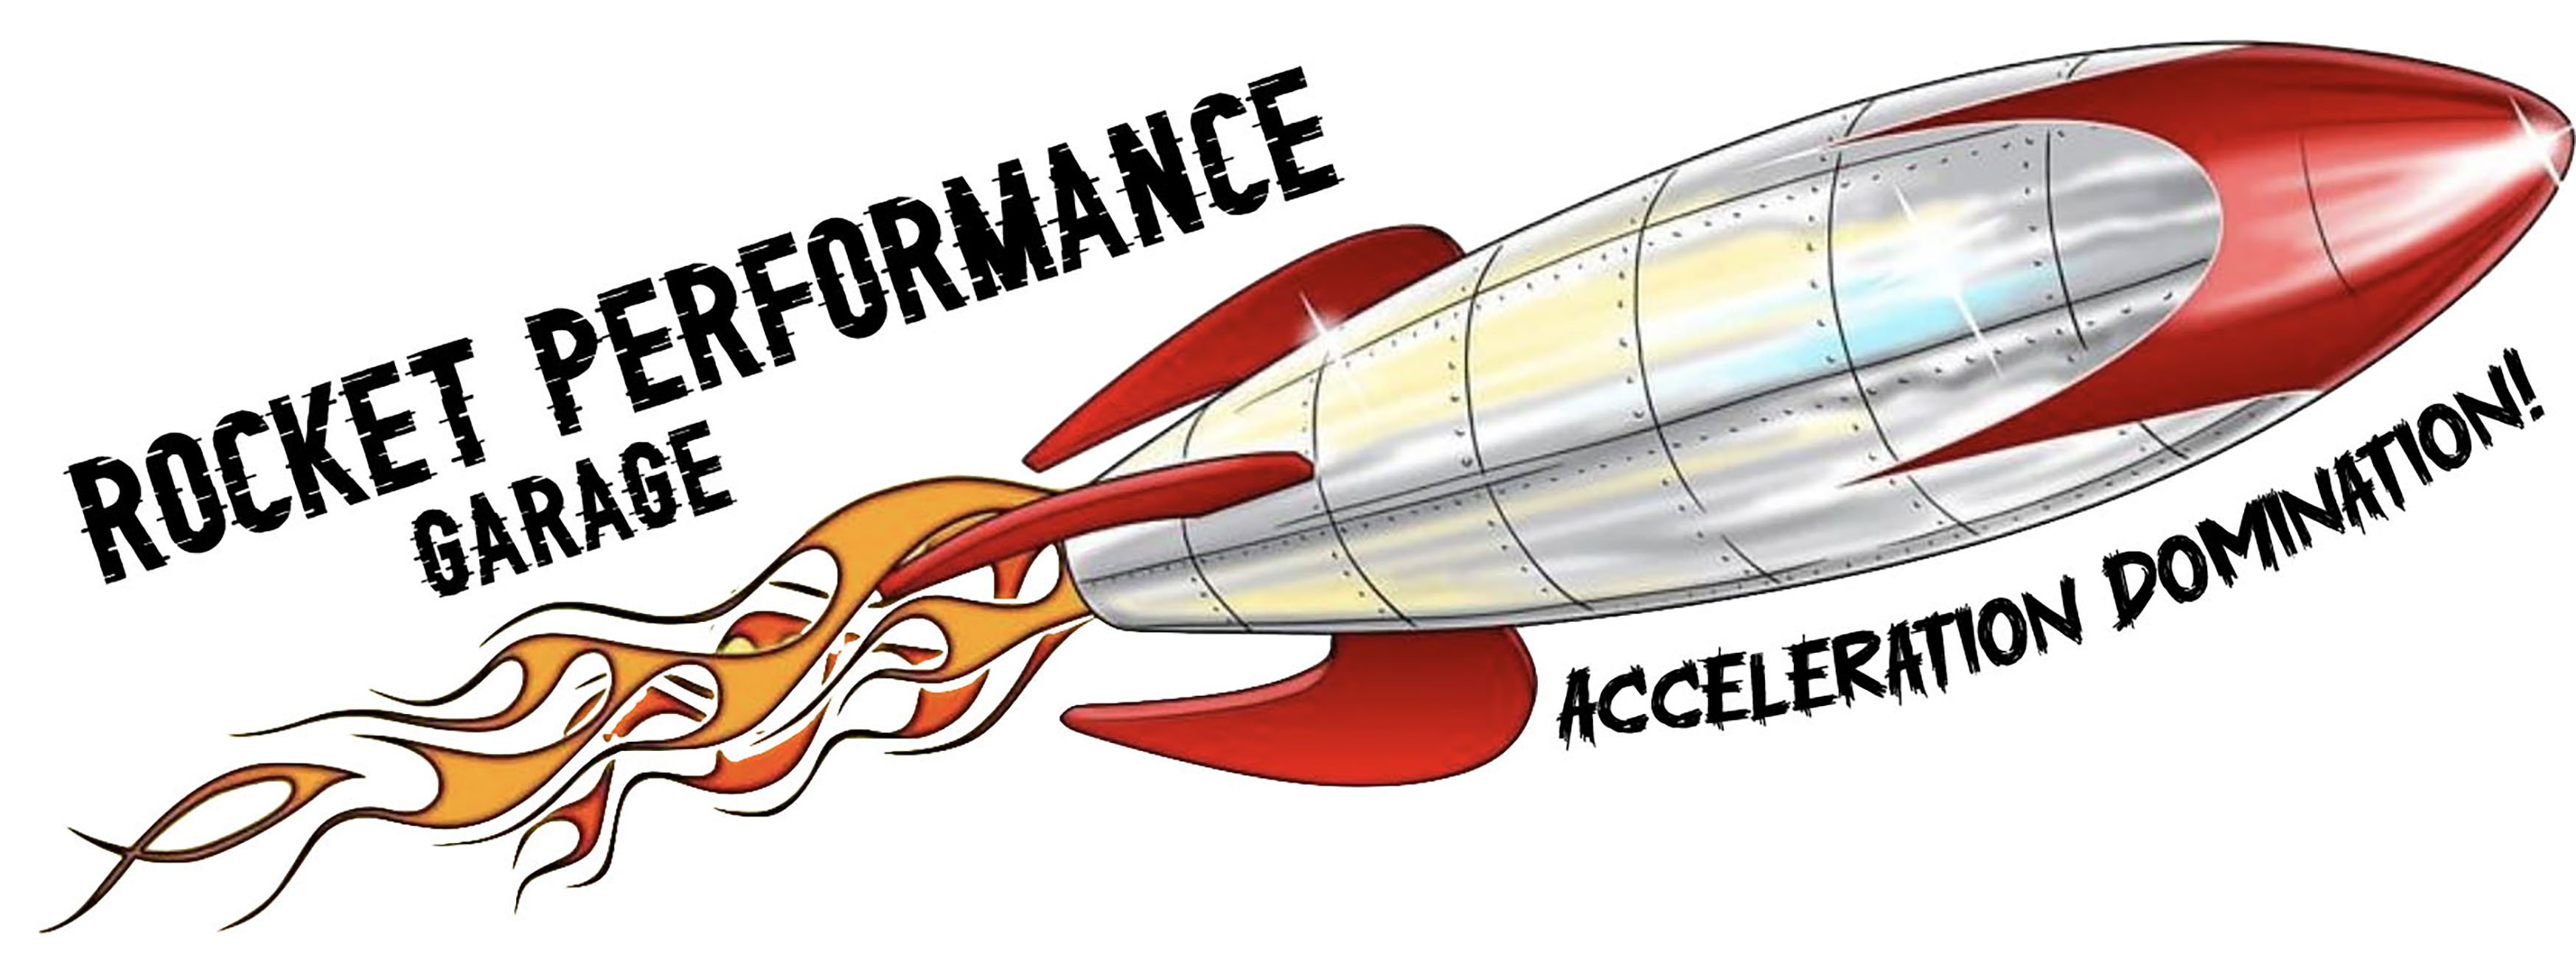 Rocket Cams Inc/Rocket Performance Garage